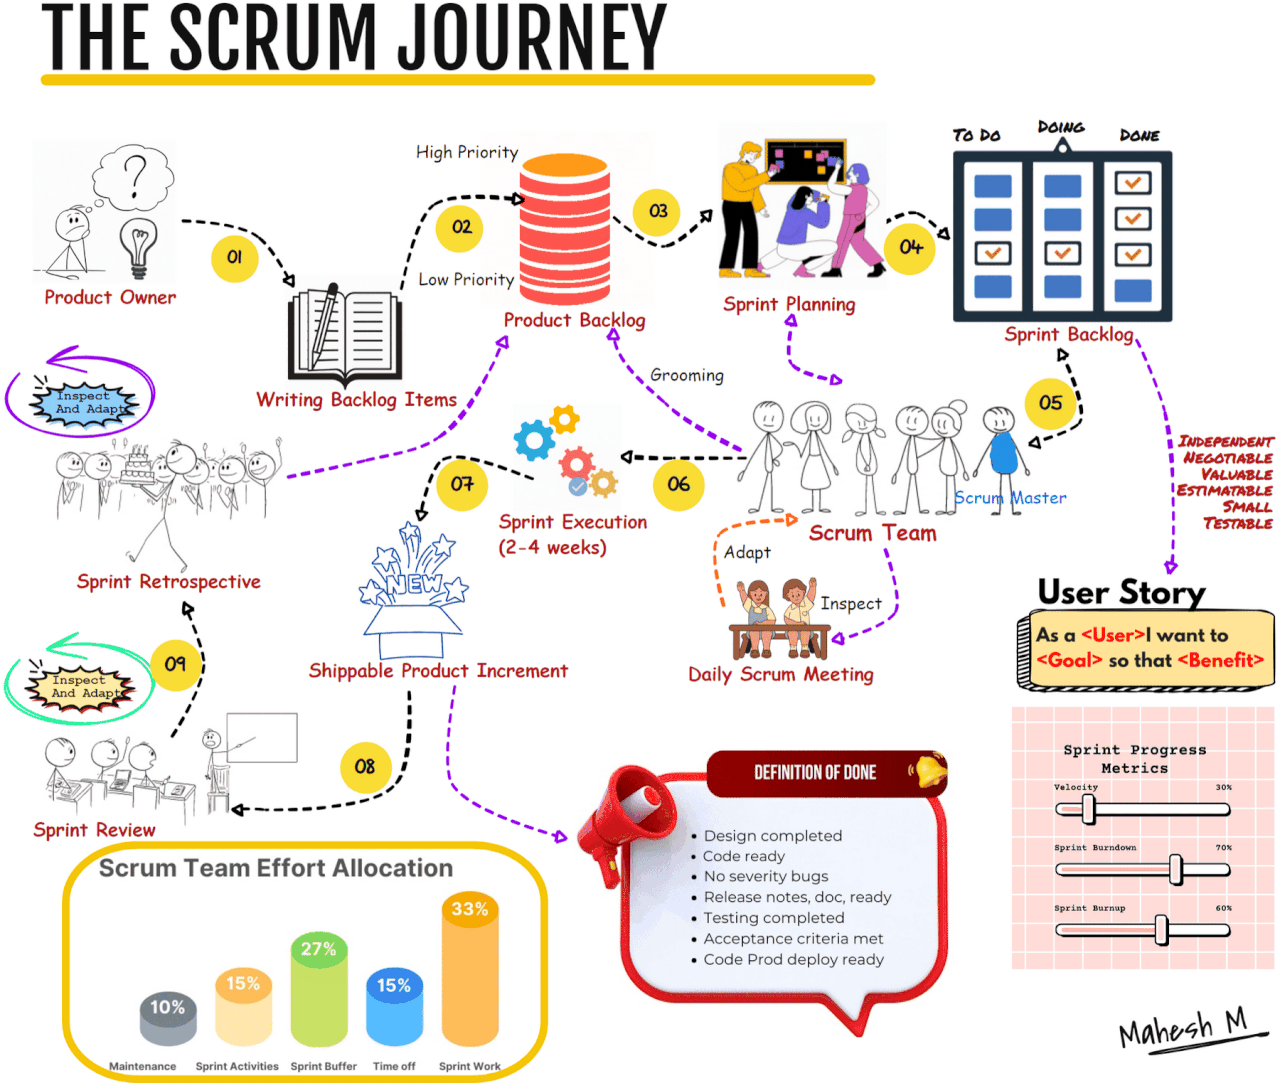 The Scrum Journey